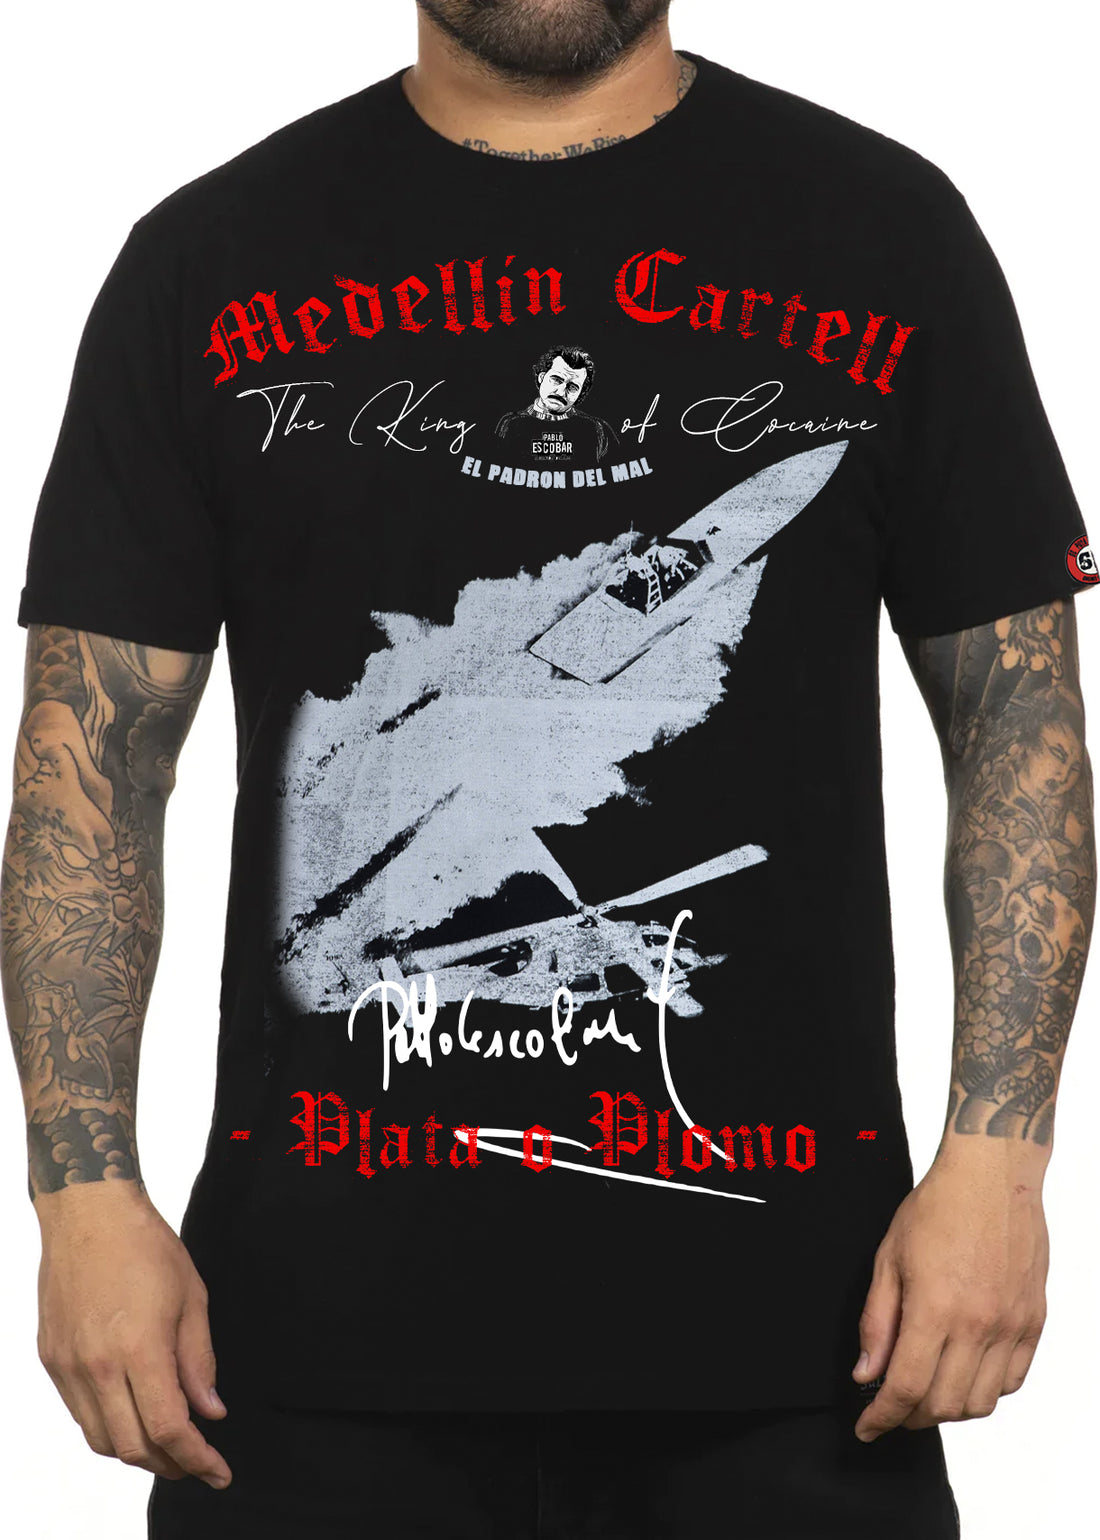 DPM69 Men's T-Shirt Medellin Cartel